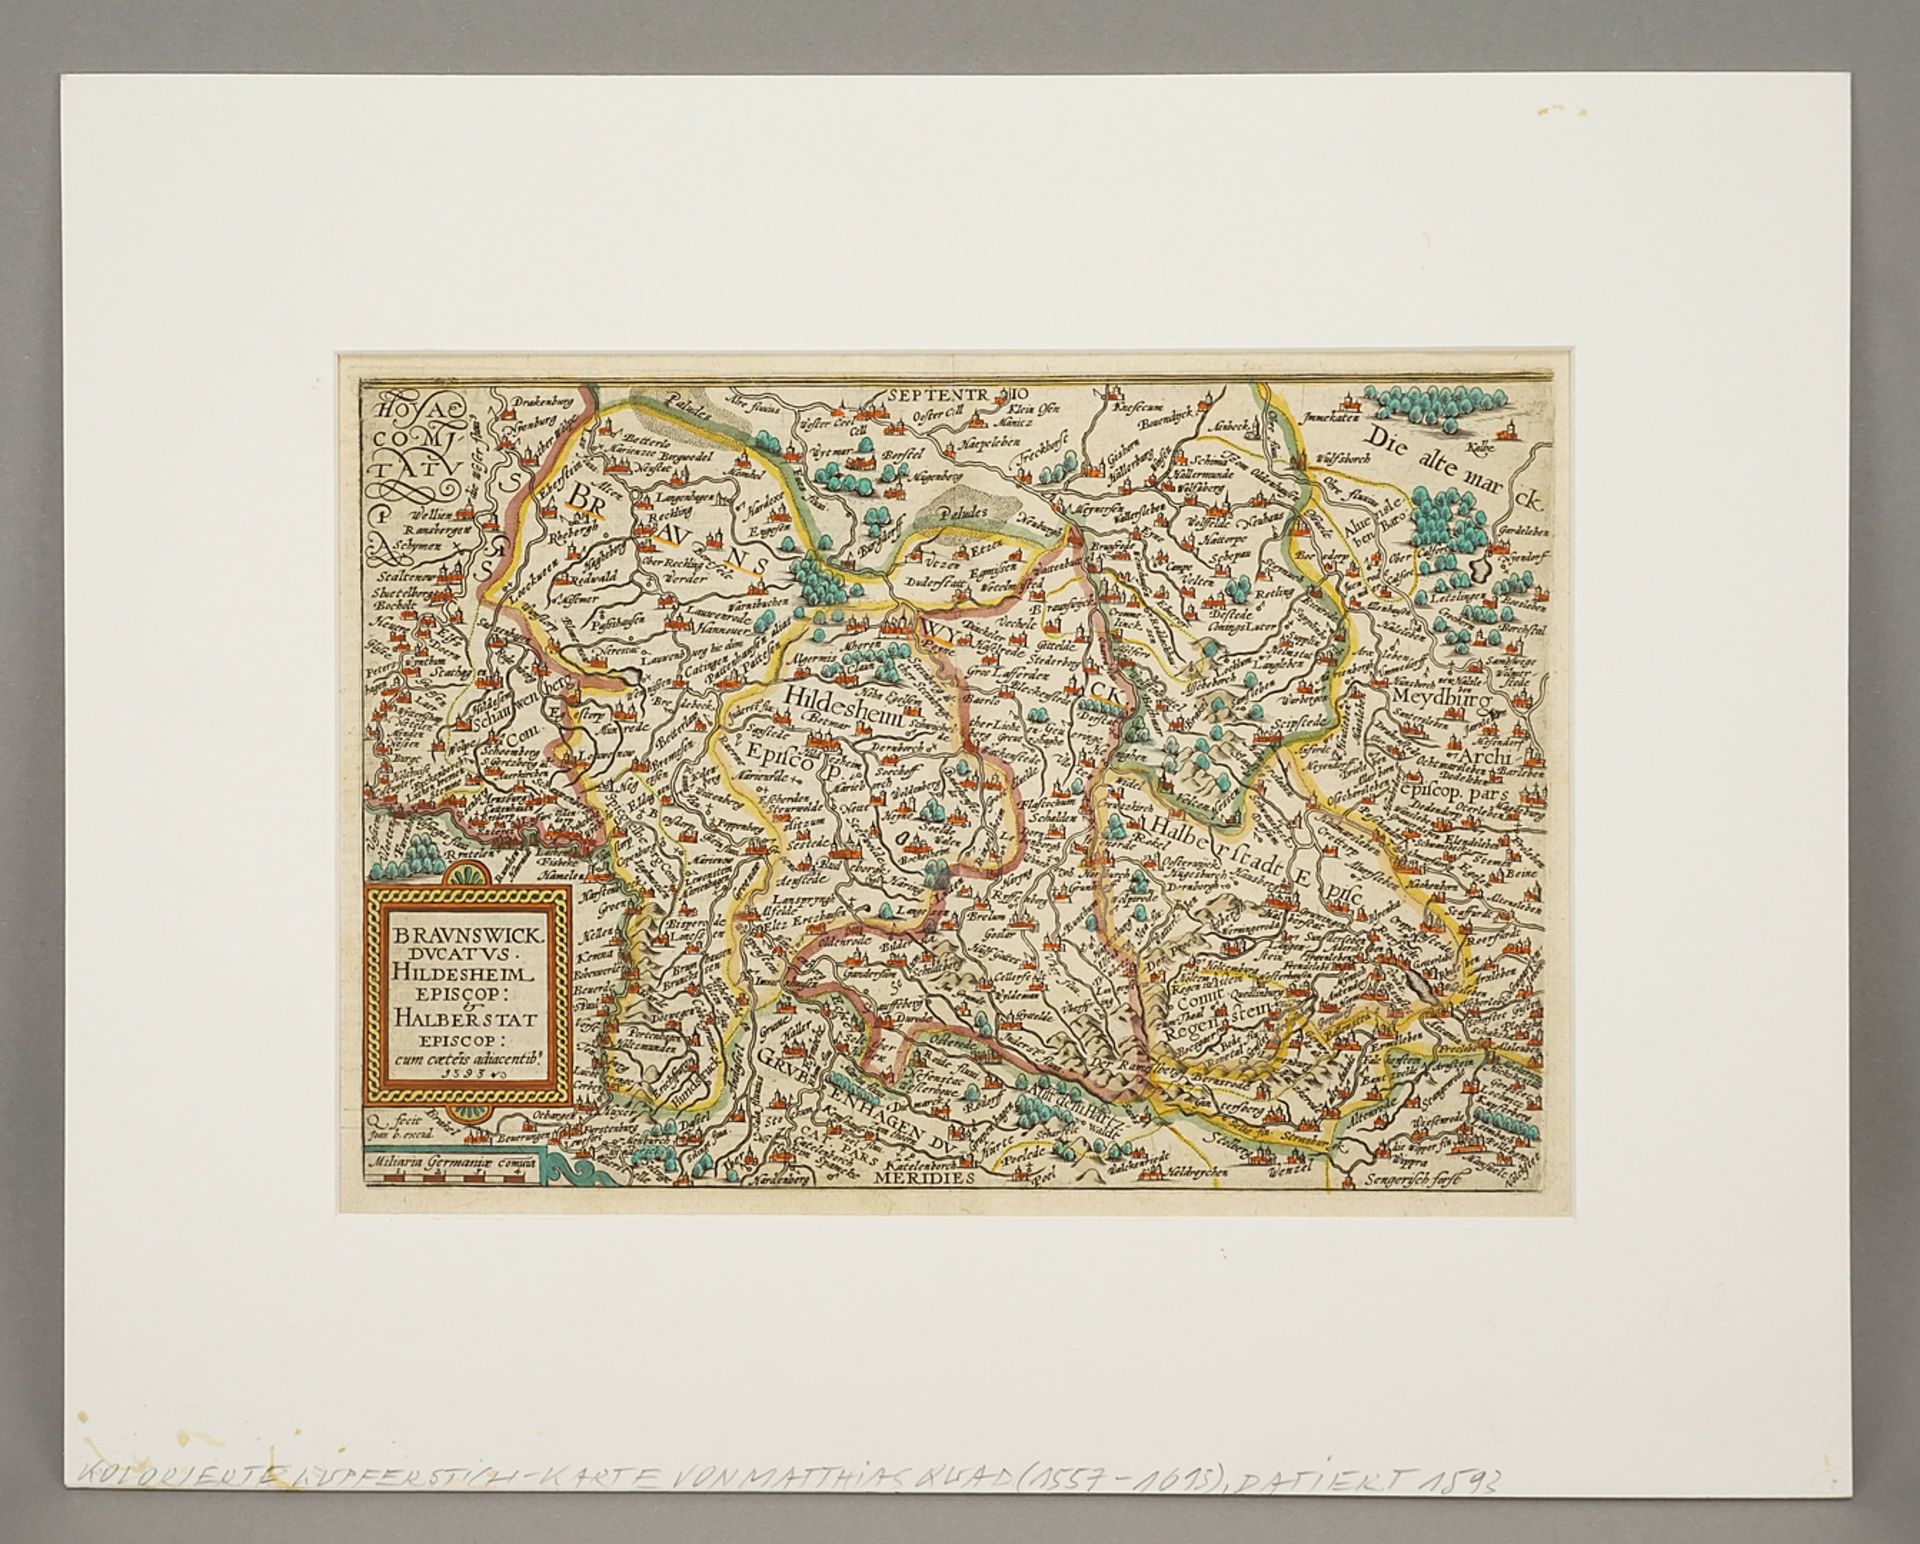 Mat(t)hias Quad (1557-1613), "Braunswick ducatus […]" (Map of Brunswick, Hildesheim and Halberstadt) - Image 2 of 4